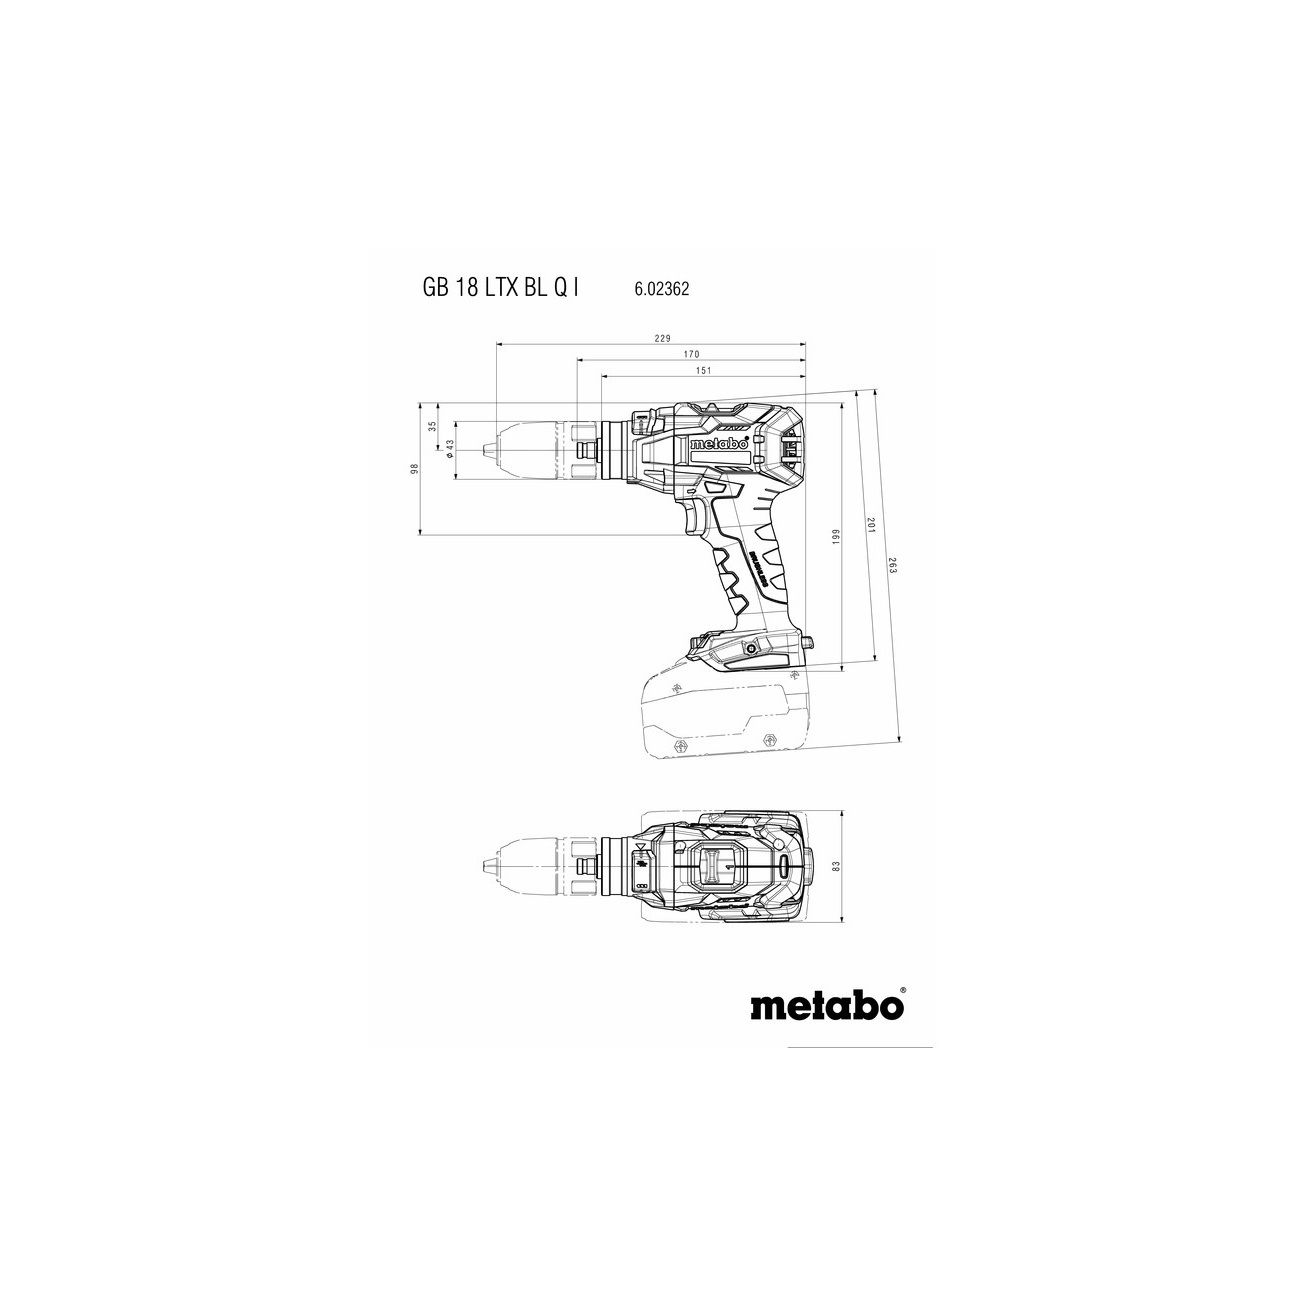 Metabo Cordless Tapper 18V GB 18 LTX BL Q I